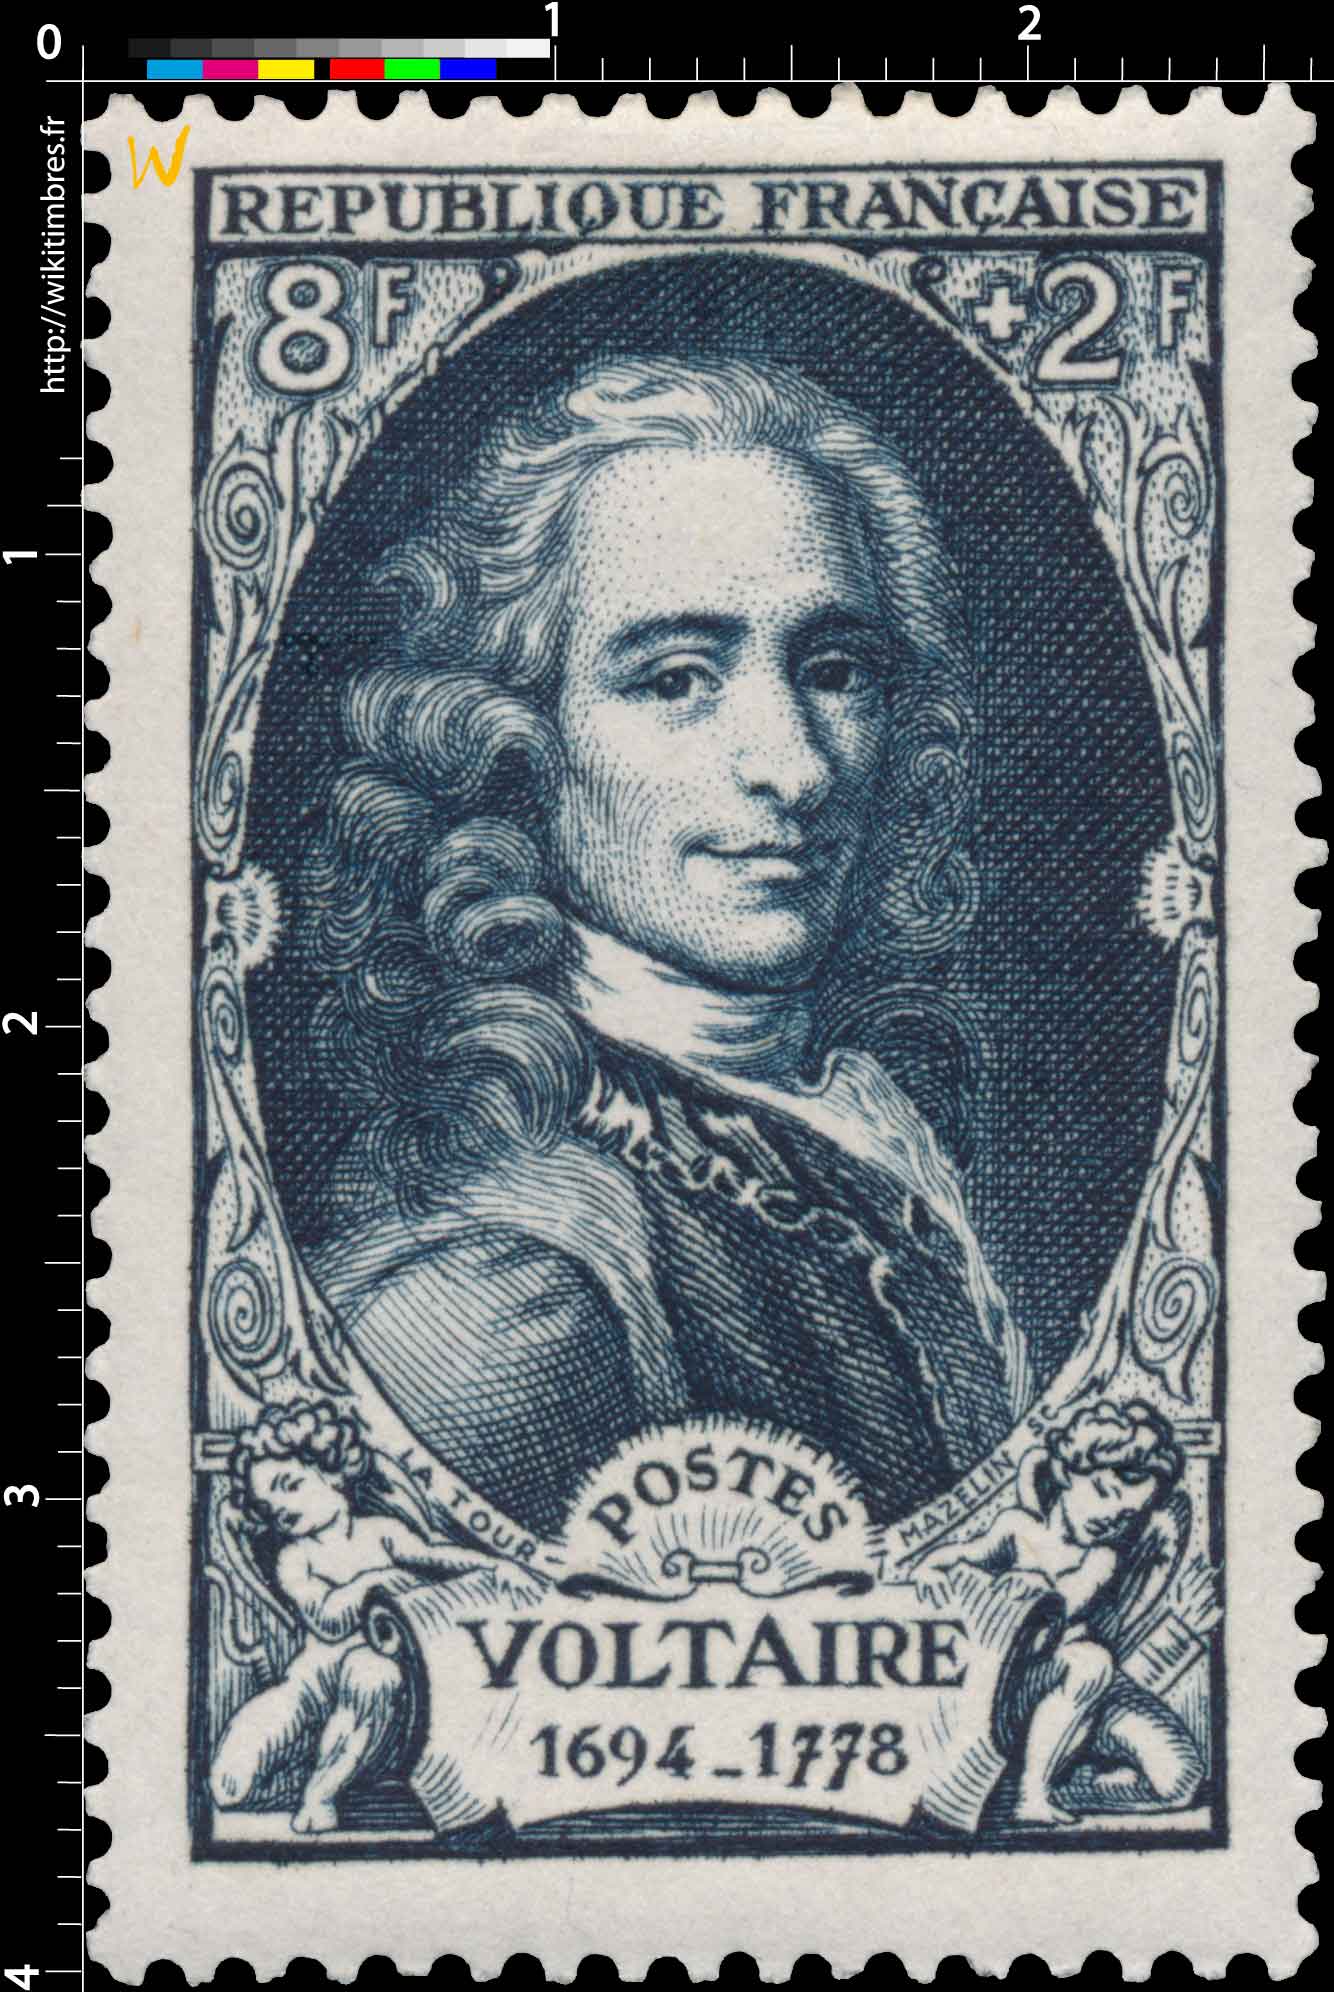 VOLTAIRE 1694-1778